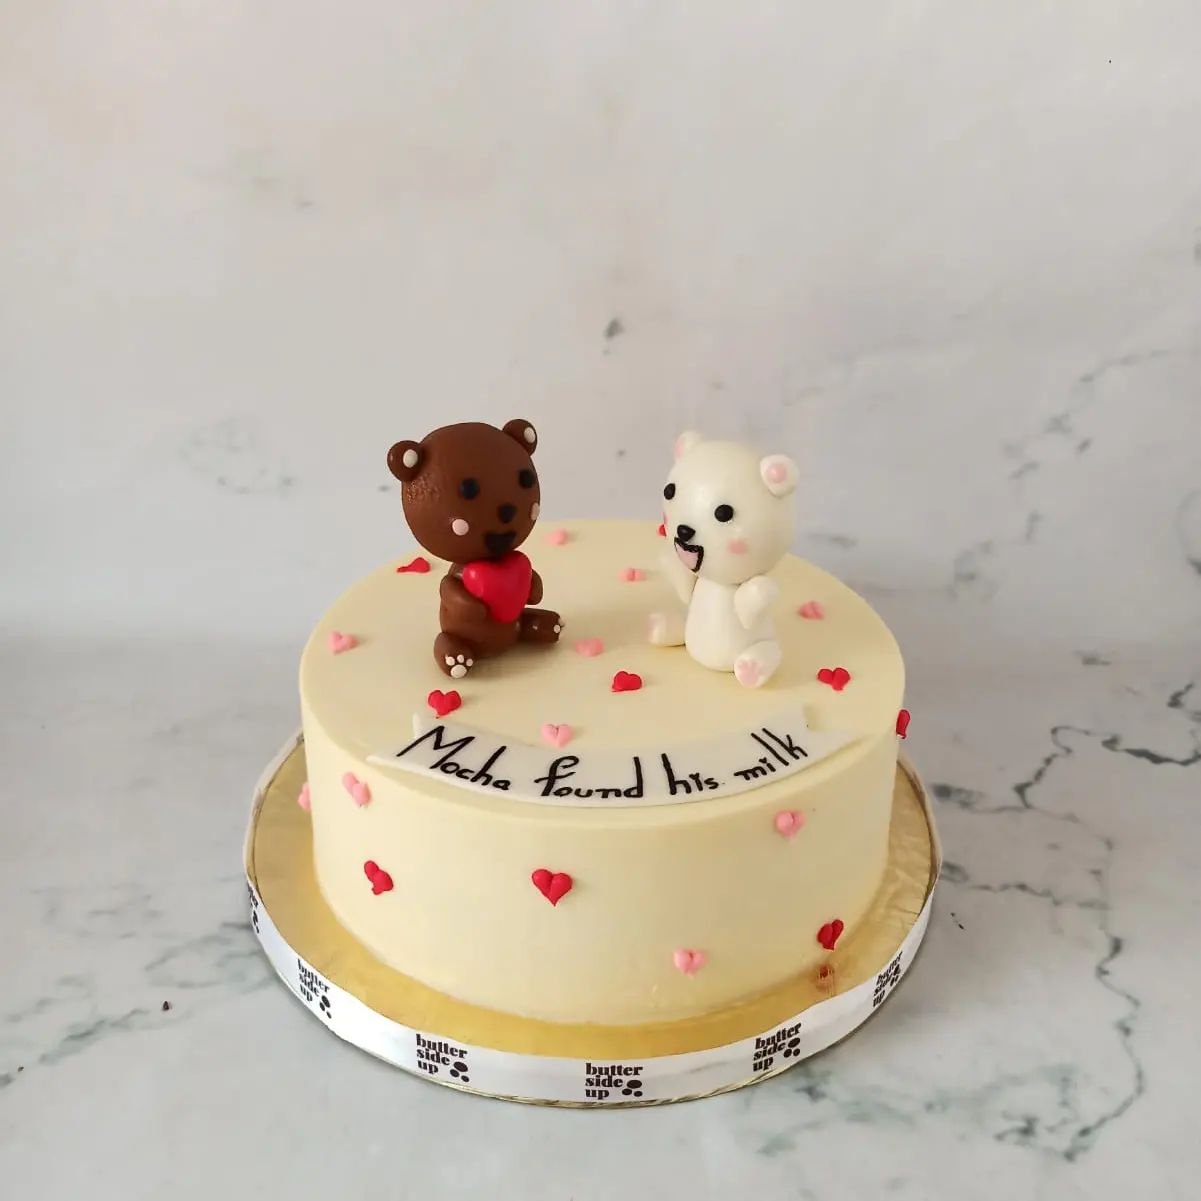 We love cute cute cakes

[Customised cakes bangalore, buttercream cakes, love theme]